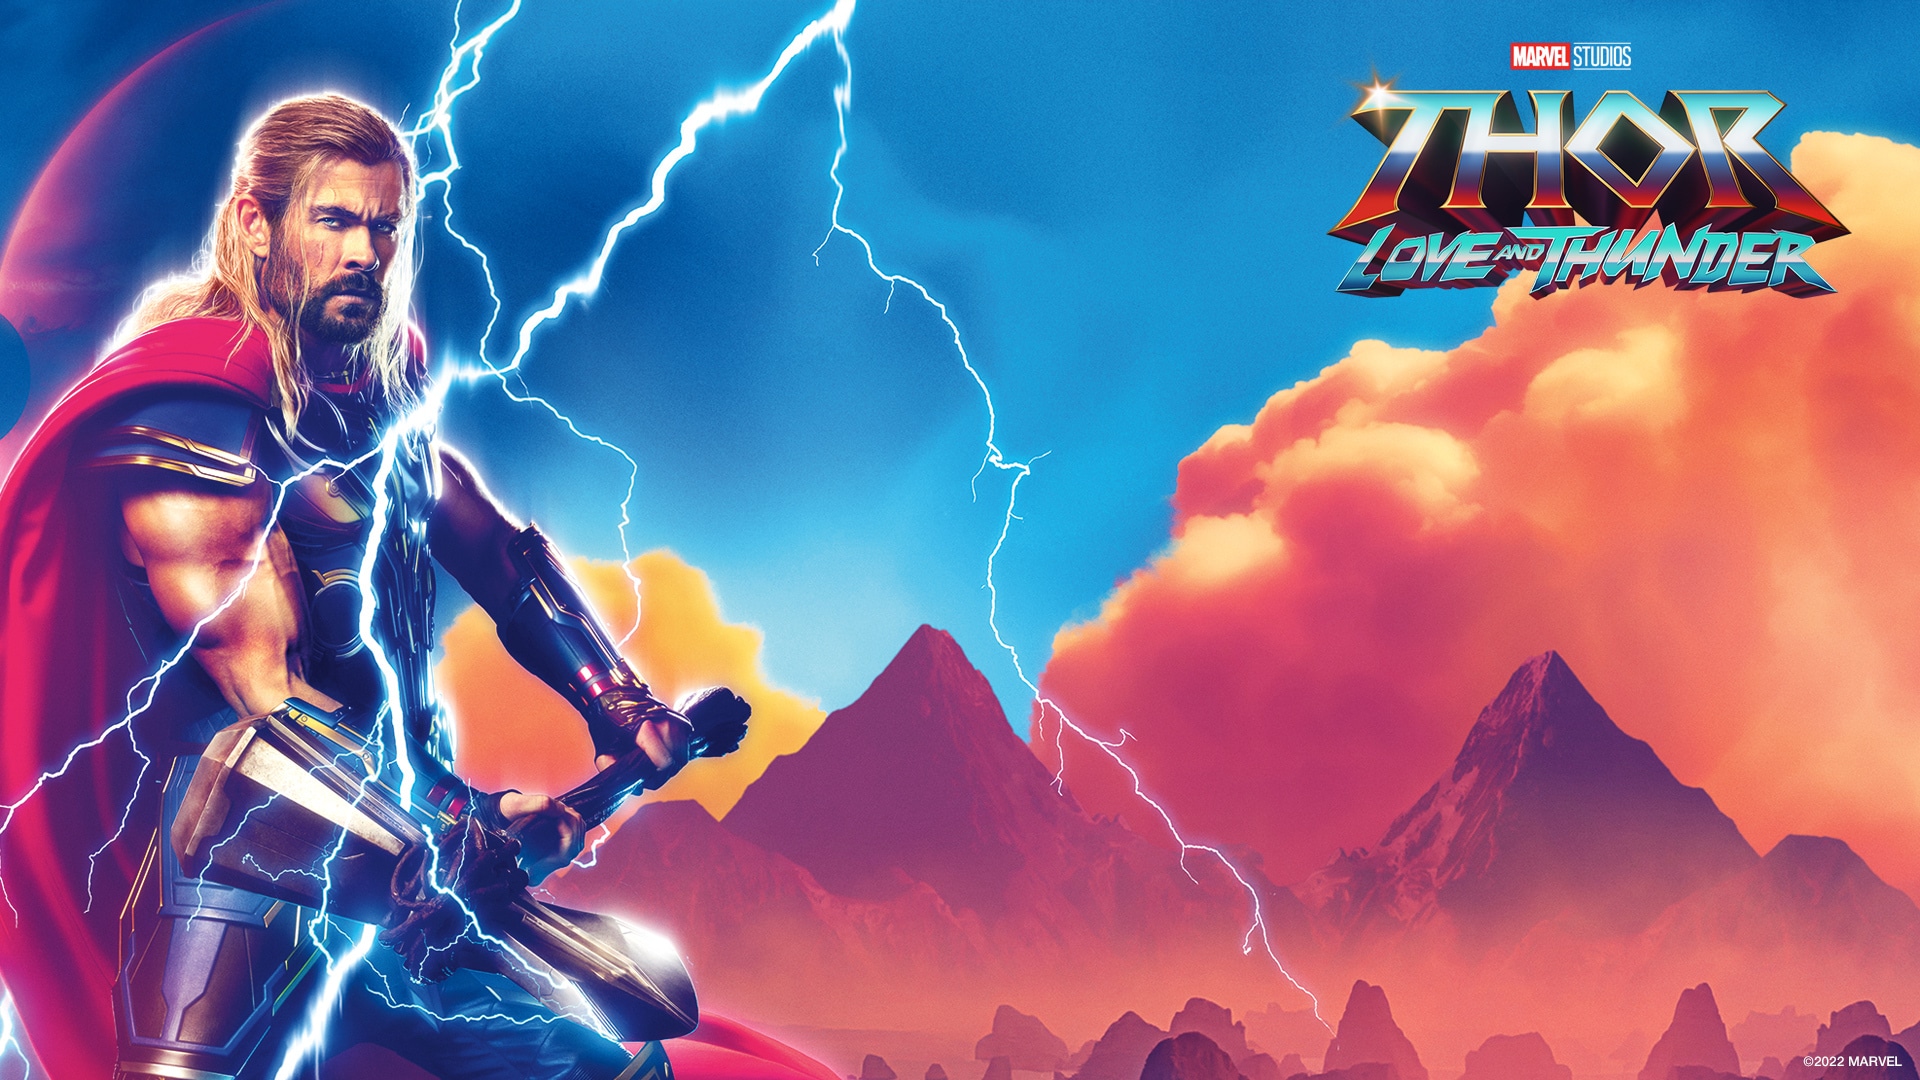 Download Marvel Hero Thor Stormbreaker With Thunders Wallpaper | Wallpapers .com